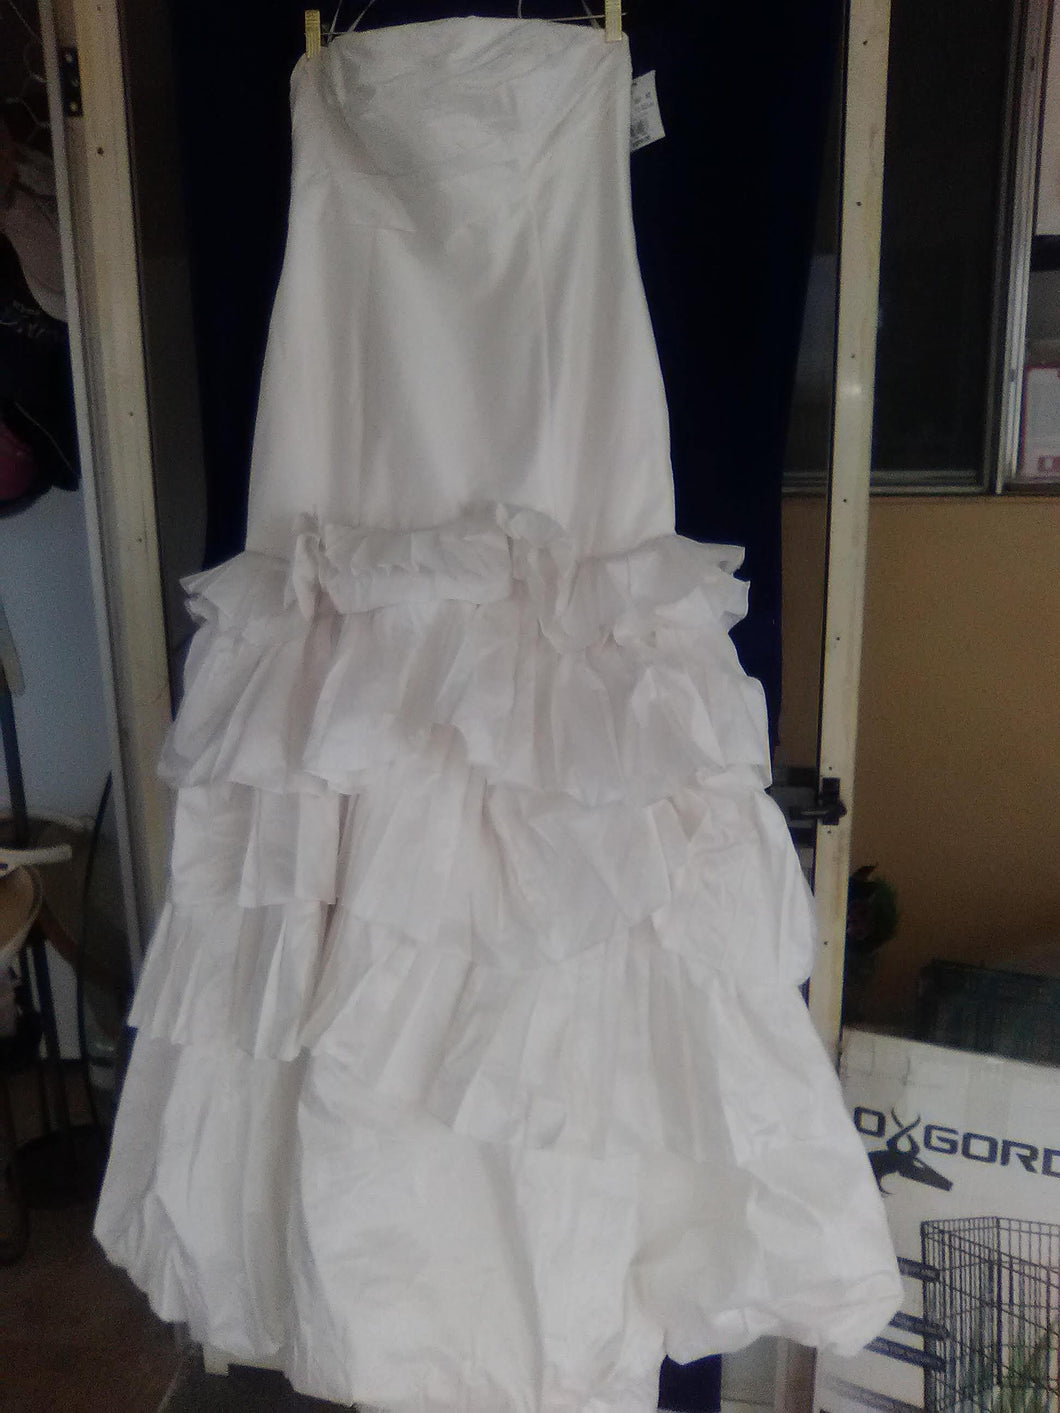 Vera Wang White 'Strapless White' size 12 new wedding dress front view on hanger